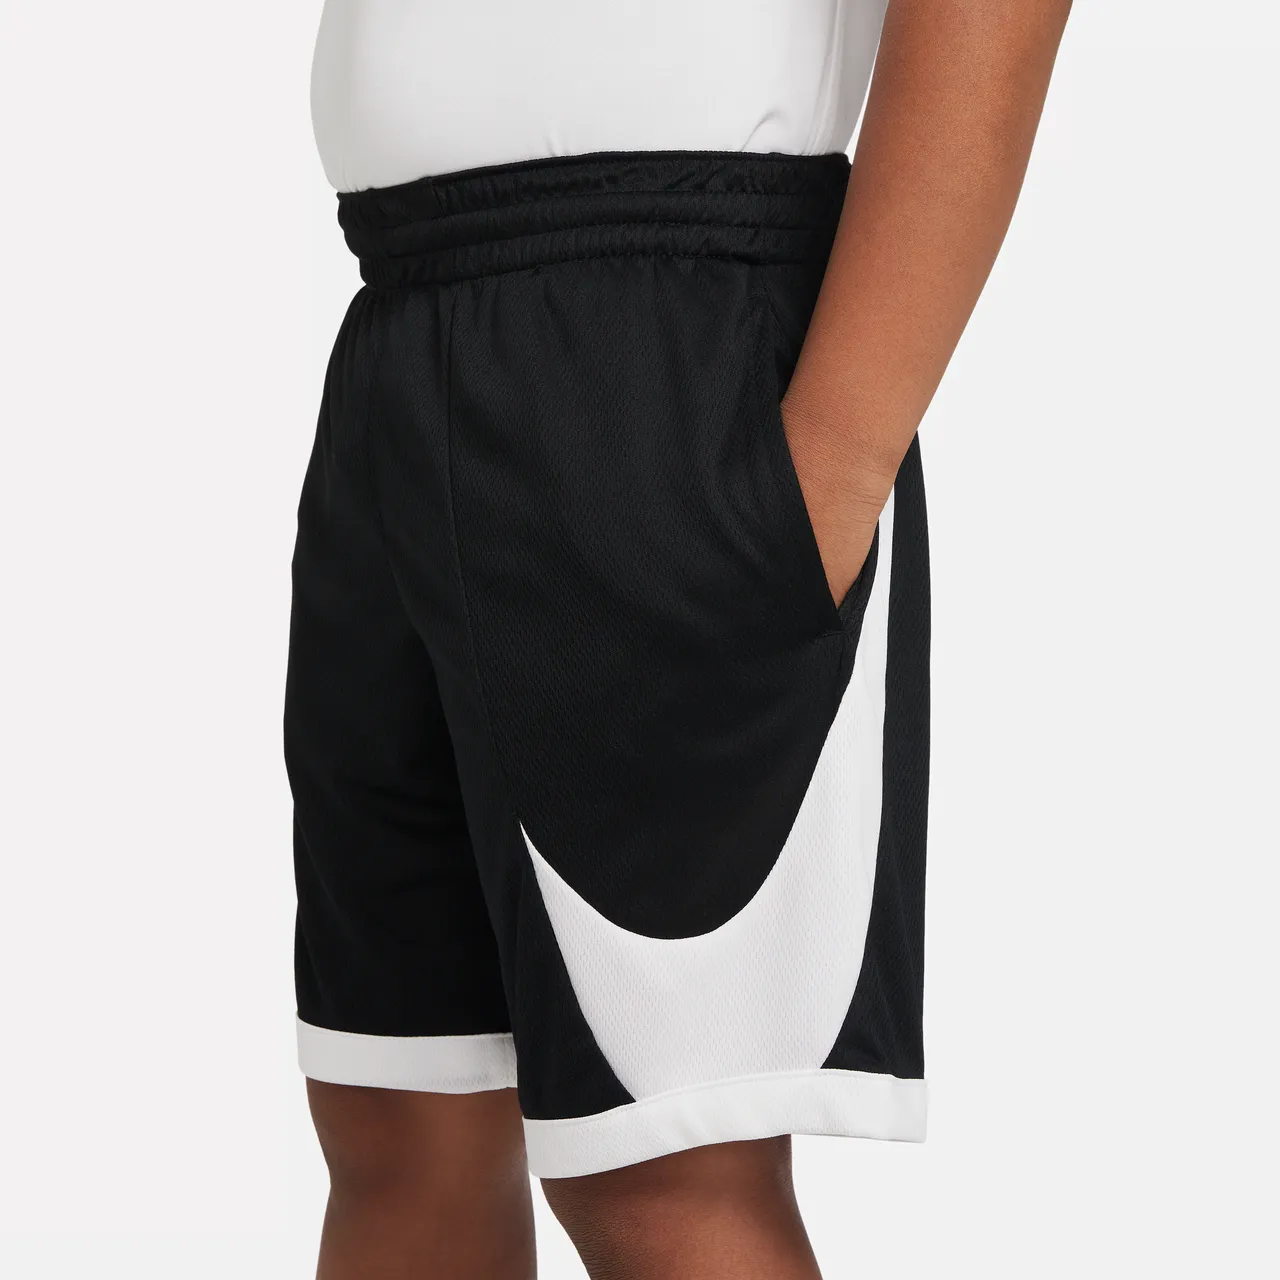 Nike Dri-FIT Older Kids' (Boys') Basketball Shorts - Black - Polyester